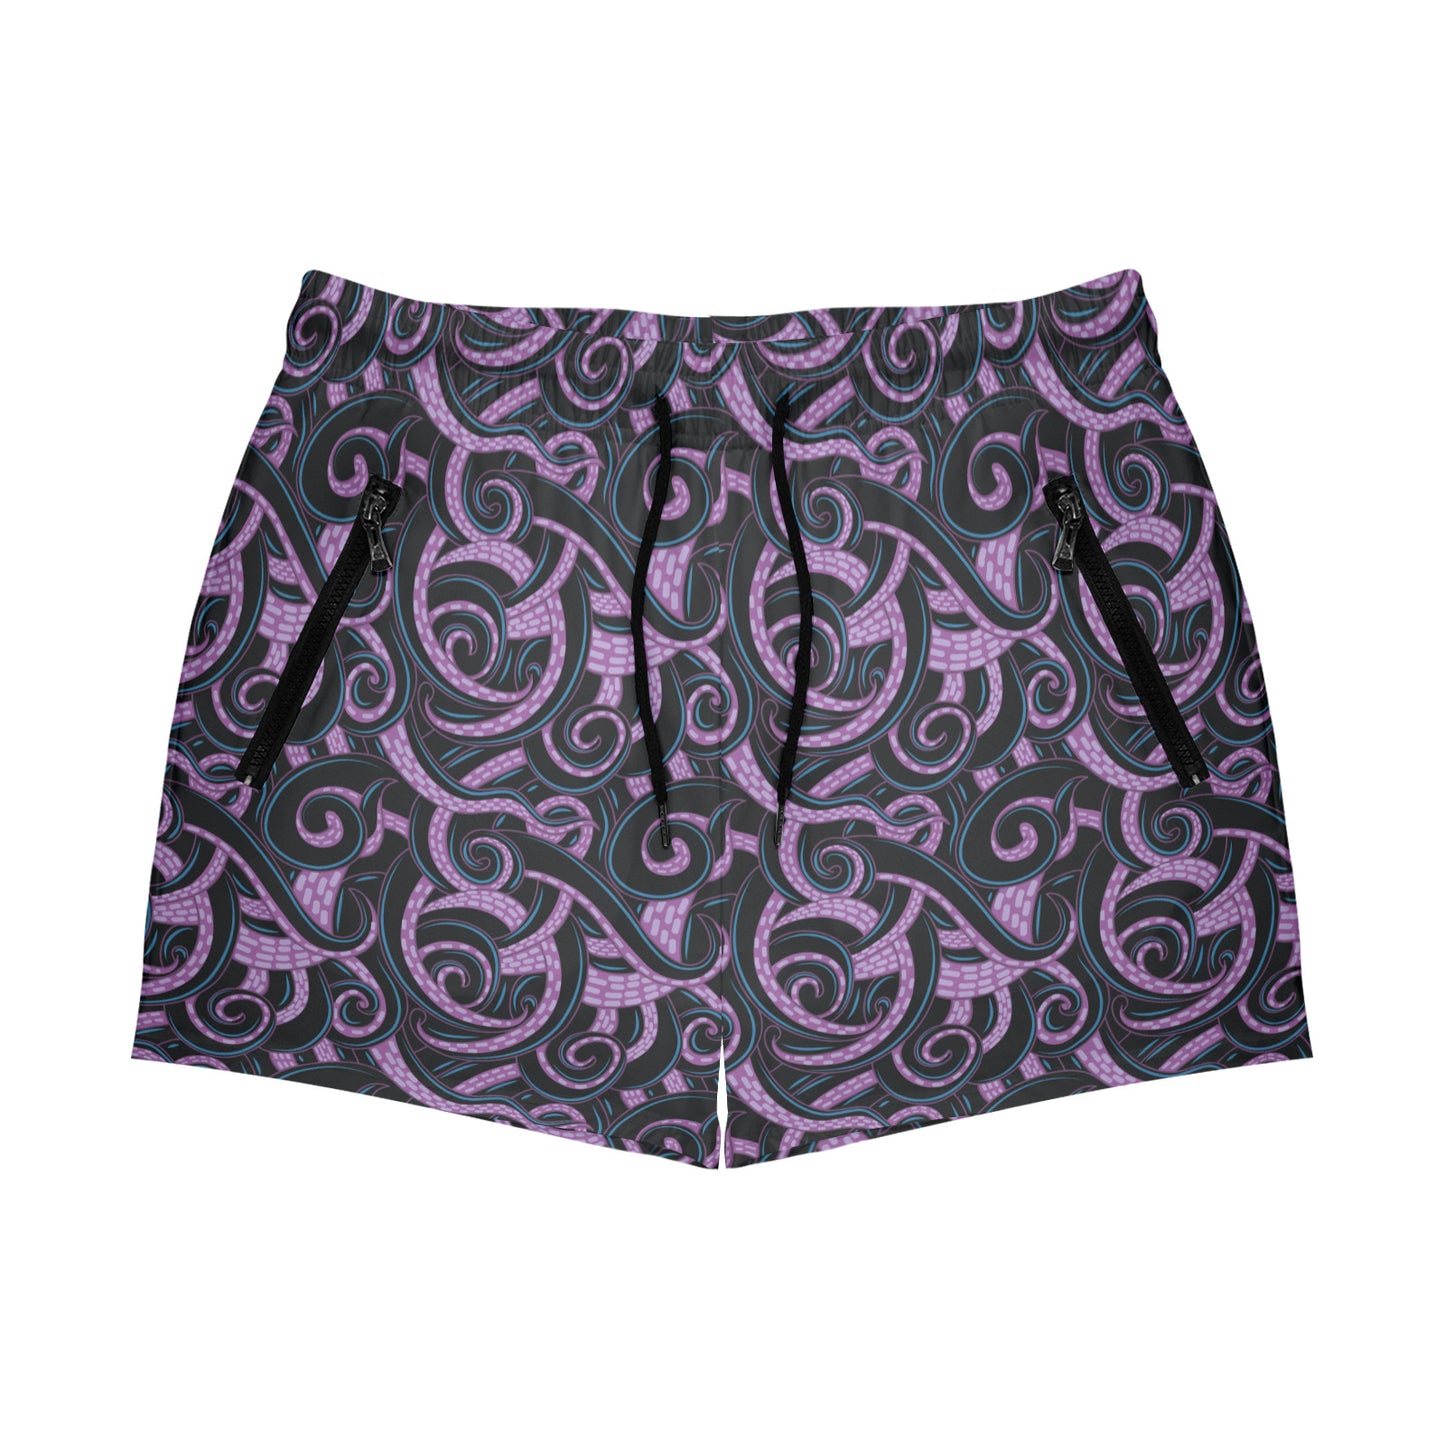 Ursula Tentacles Men's Quick Dry Athletic Shorts